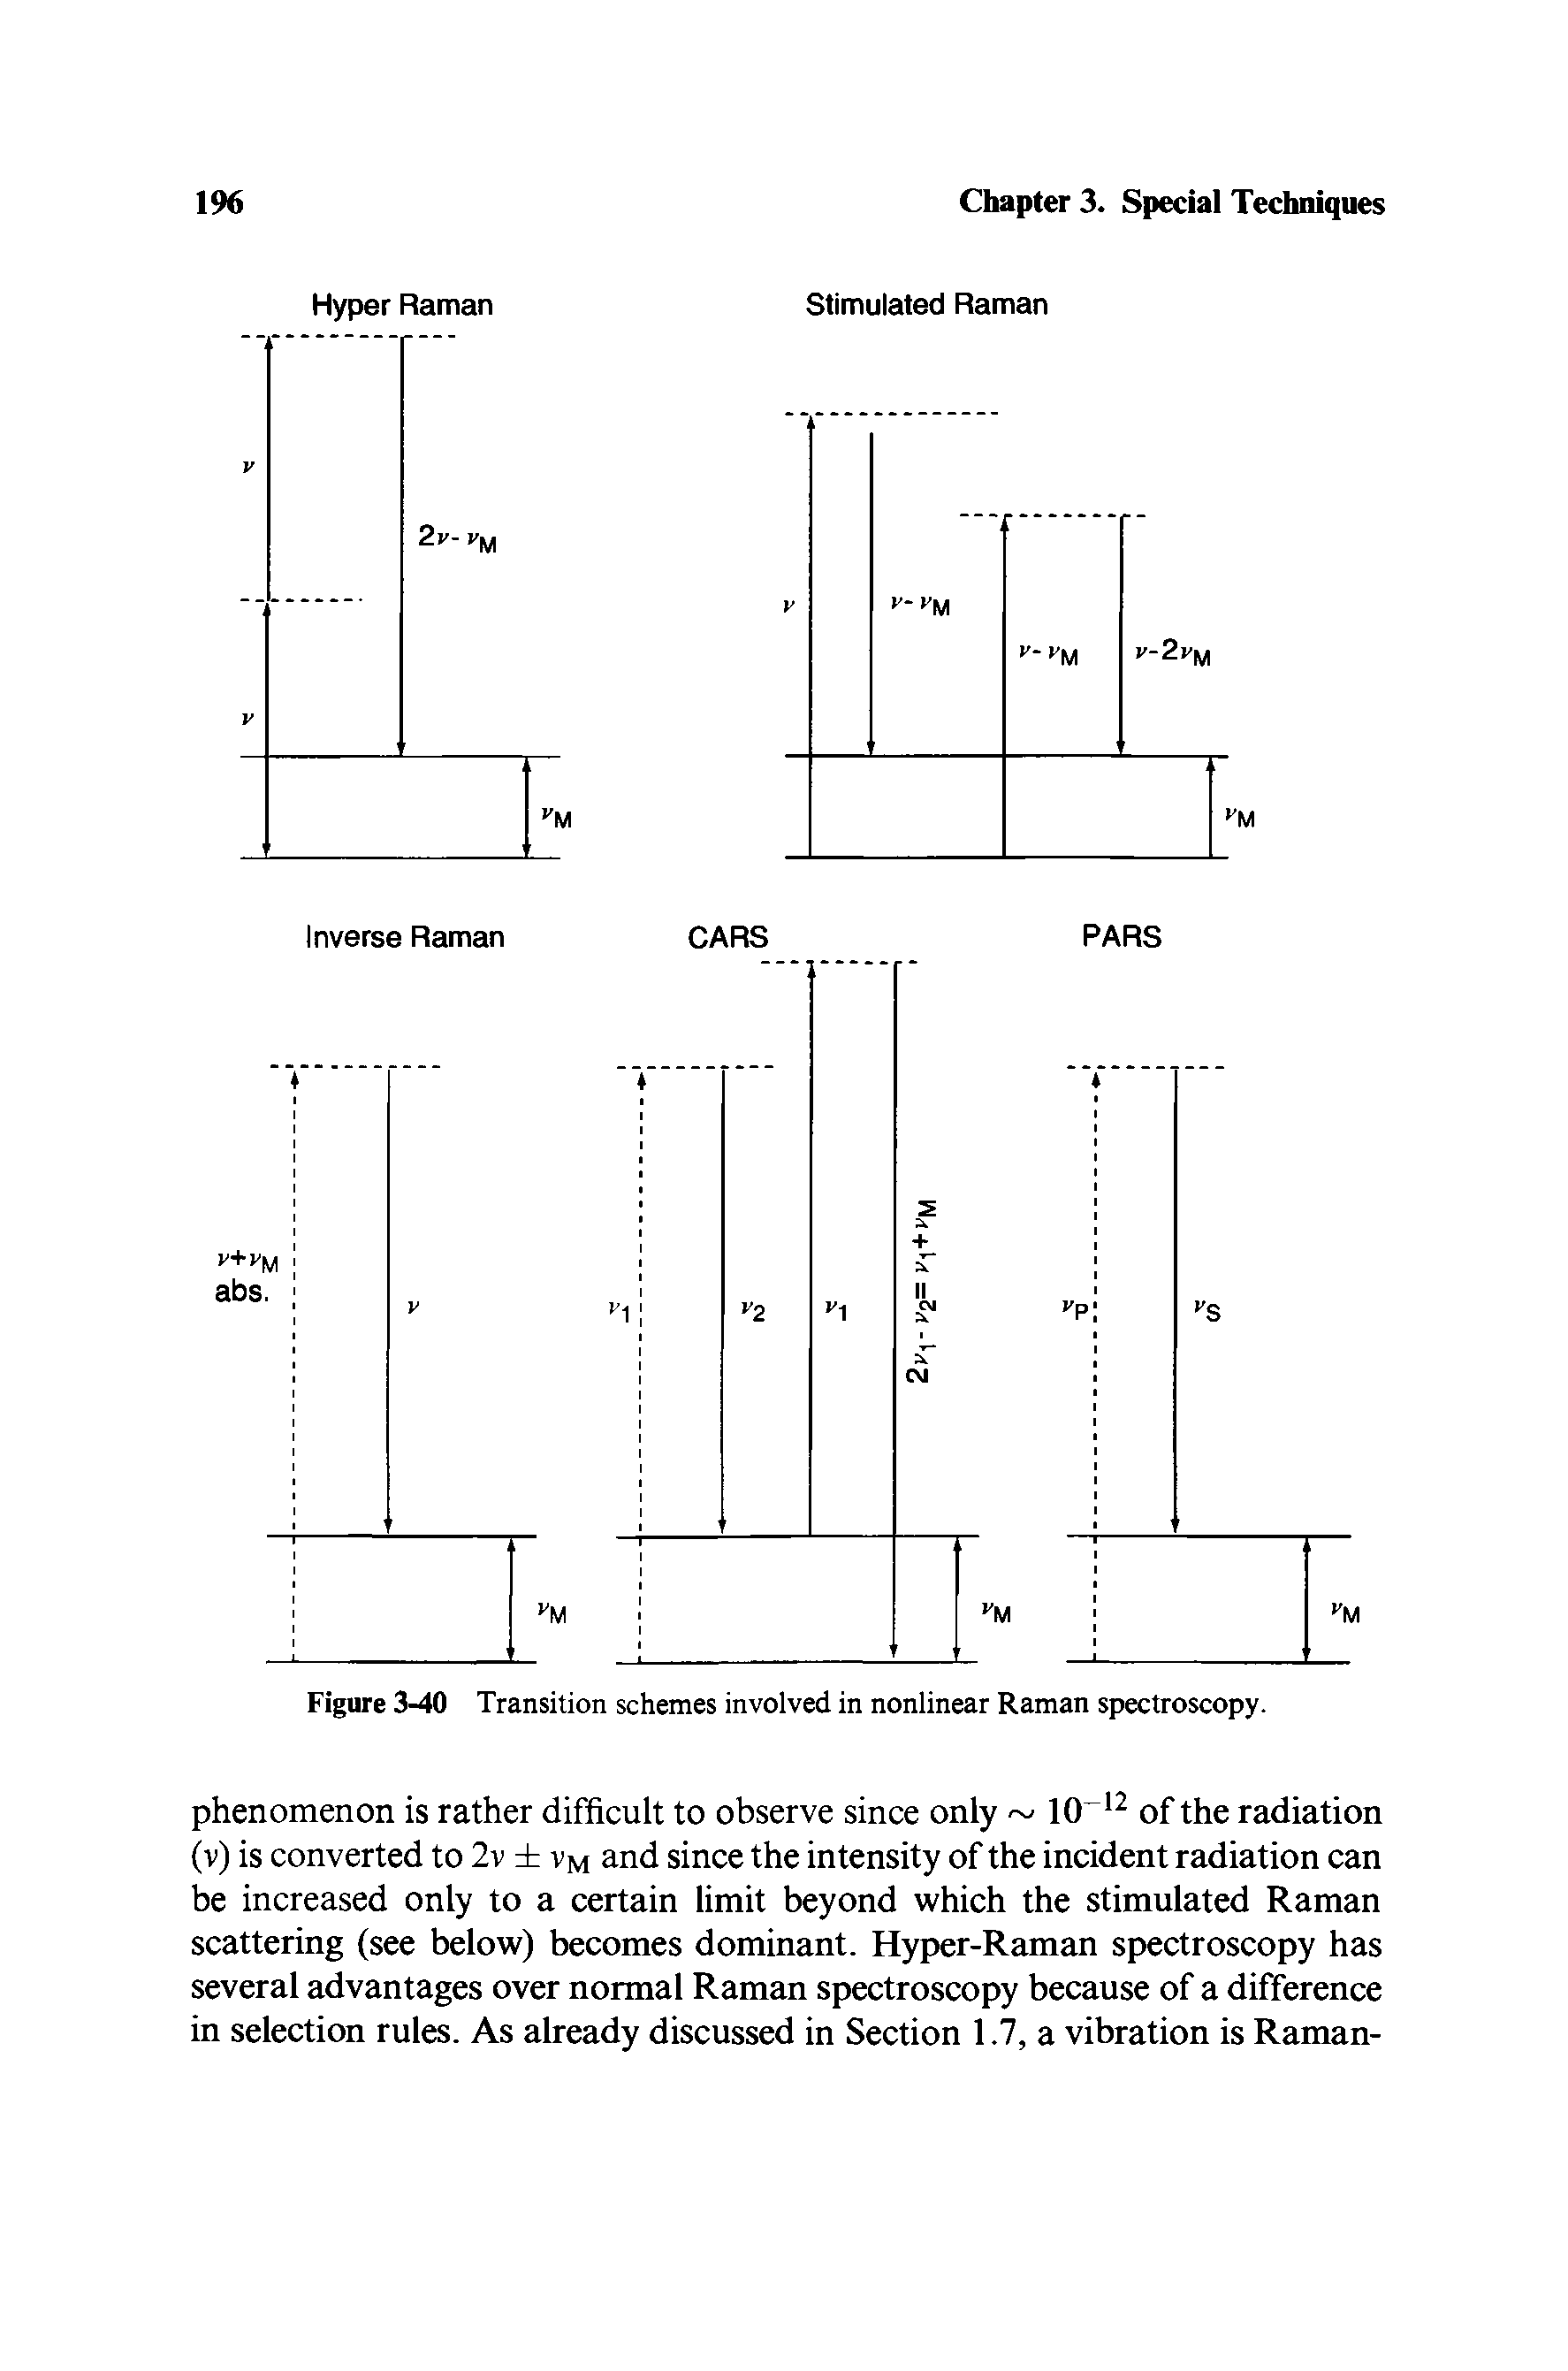 Figure 3-40 Transition schemes involved in nonlinear Raman spectroscopy.